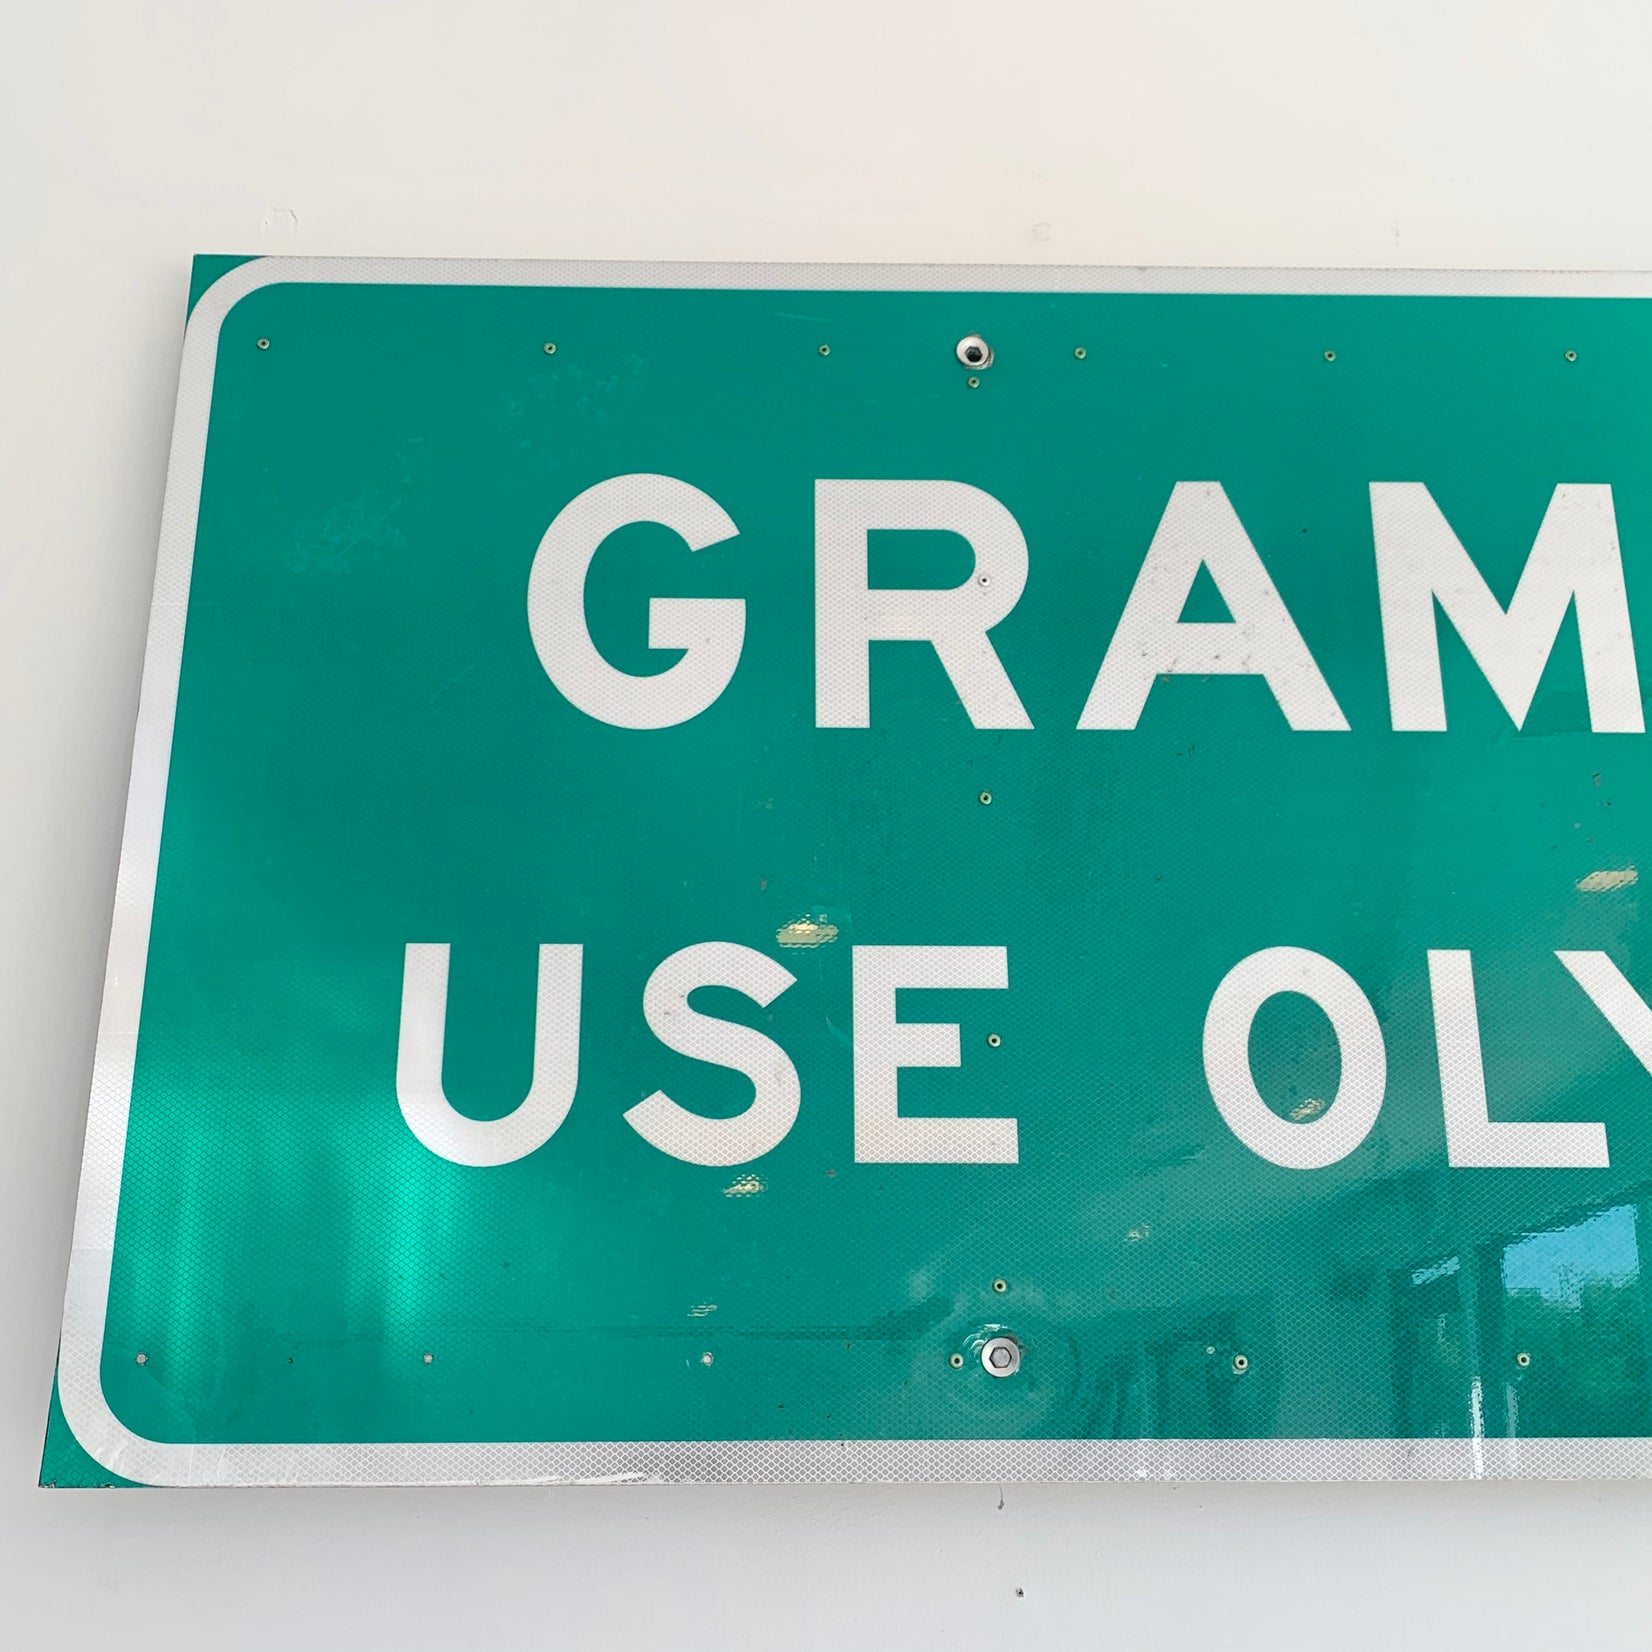 Grammy Museum Los Angeles Freeway Sign